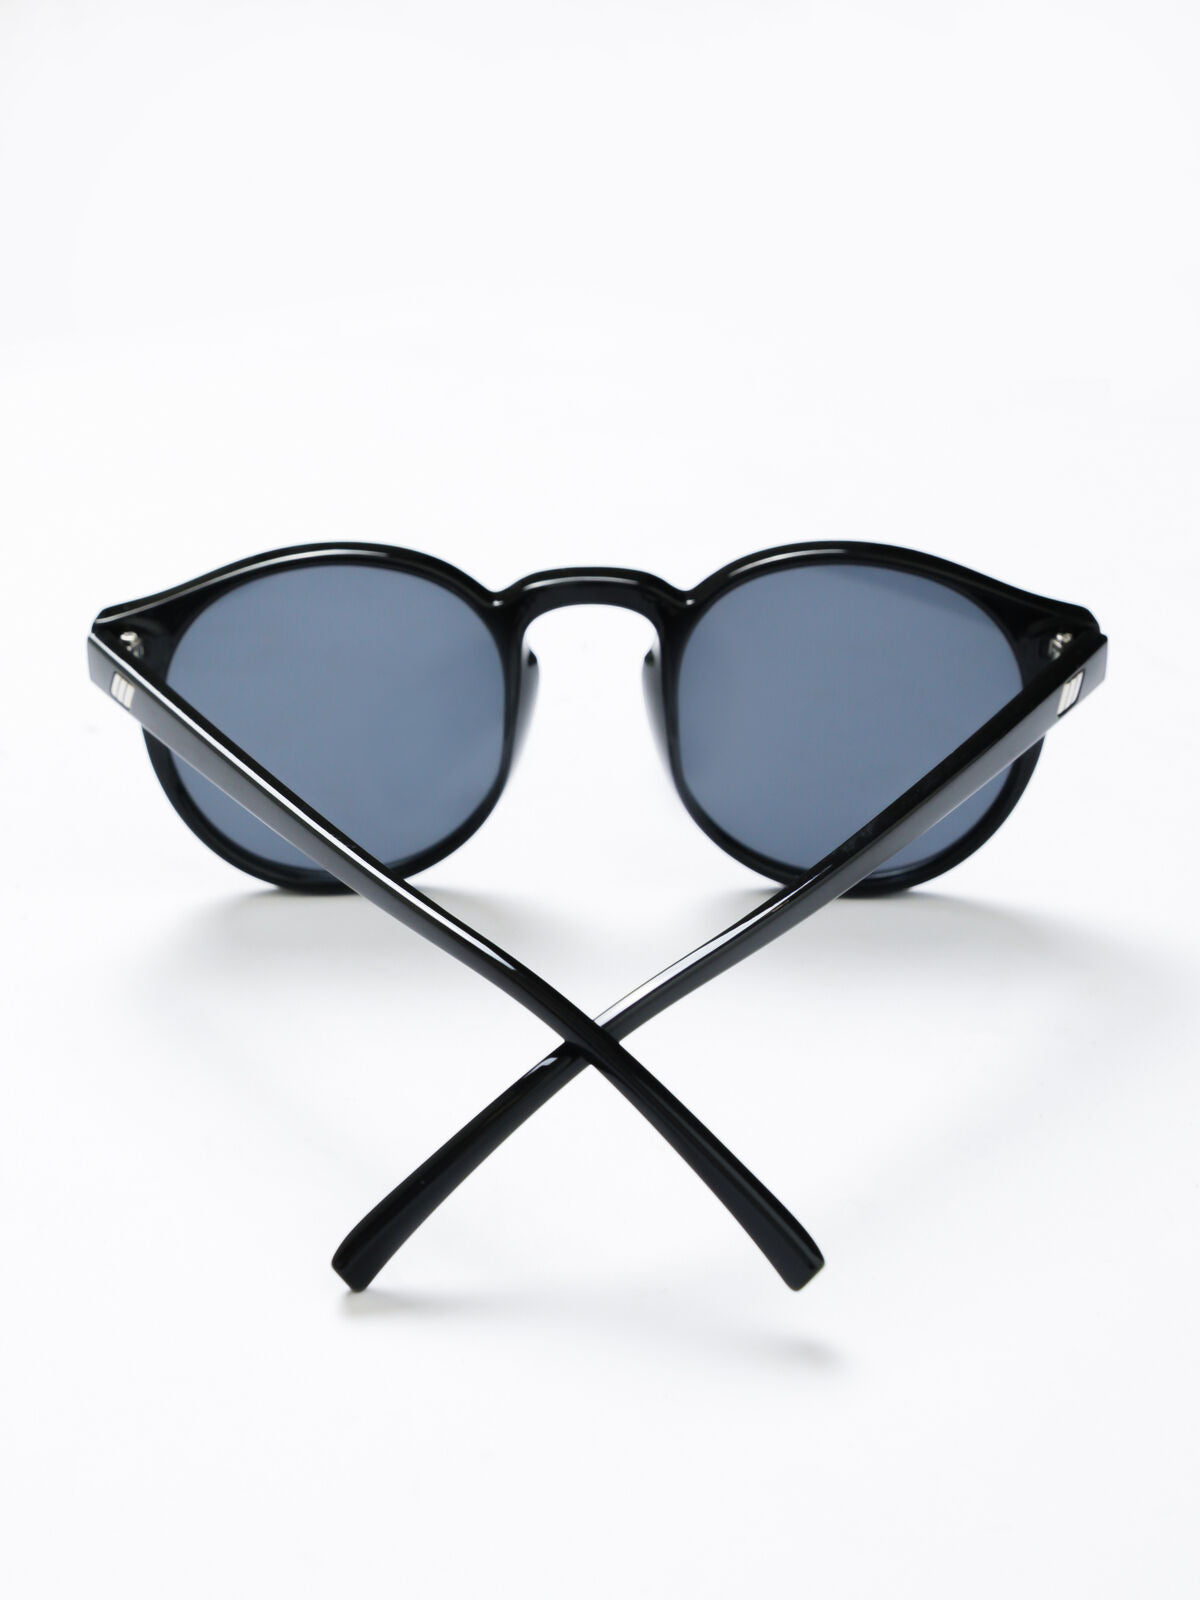 Teen Spirit Deux Sunglasses in Black with Black Lens - Glue Store